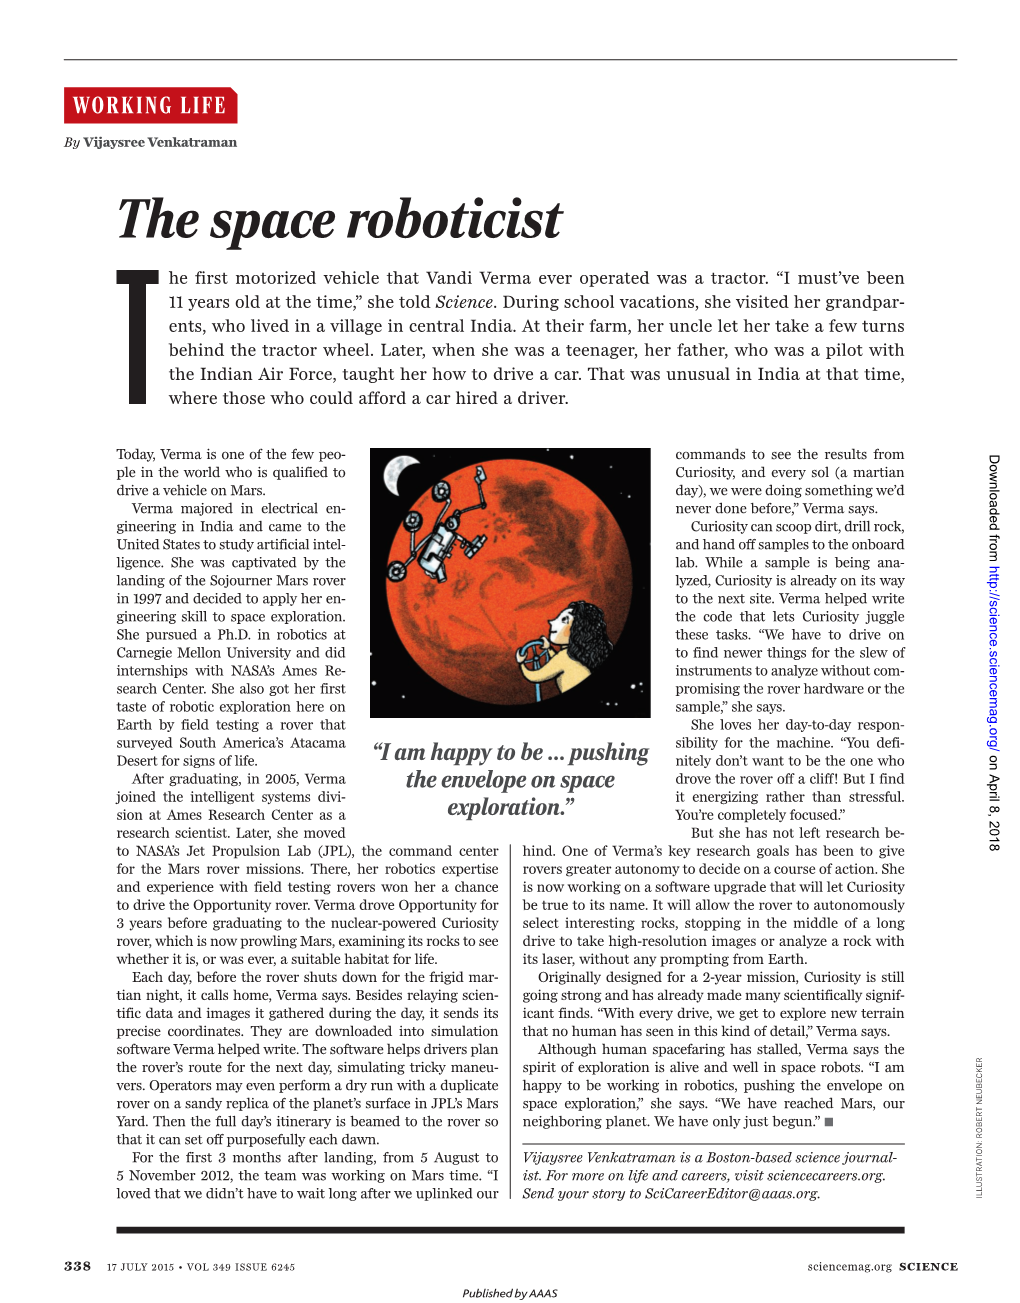 The Space Roboticist